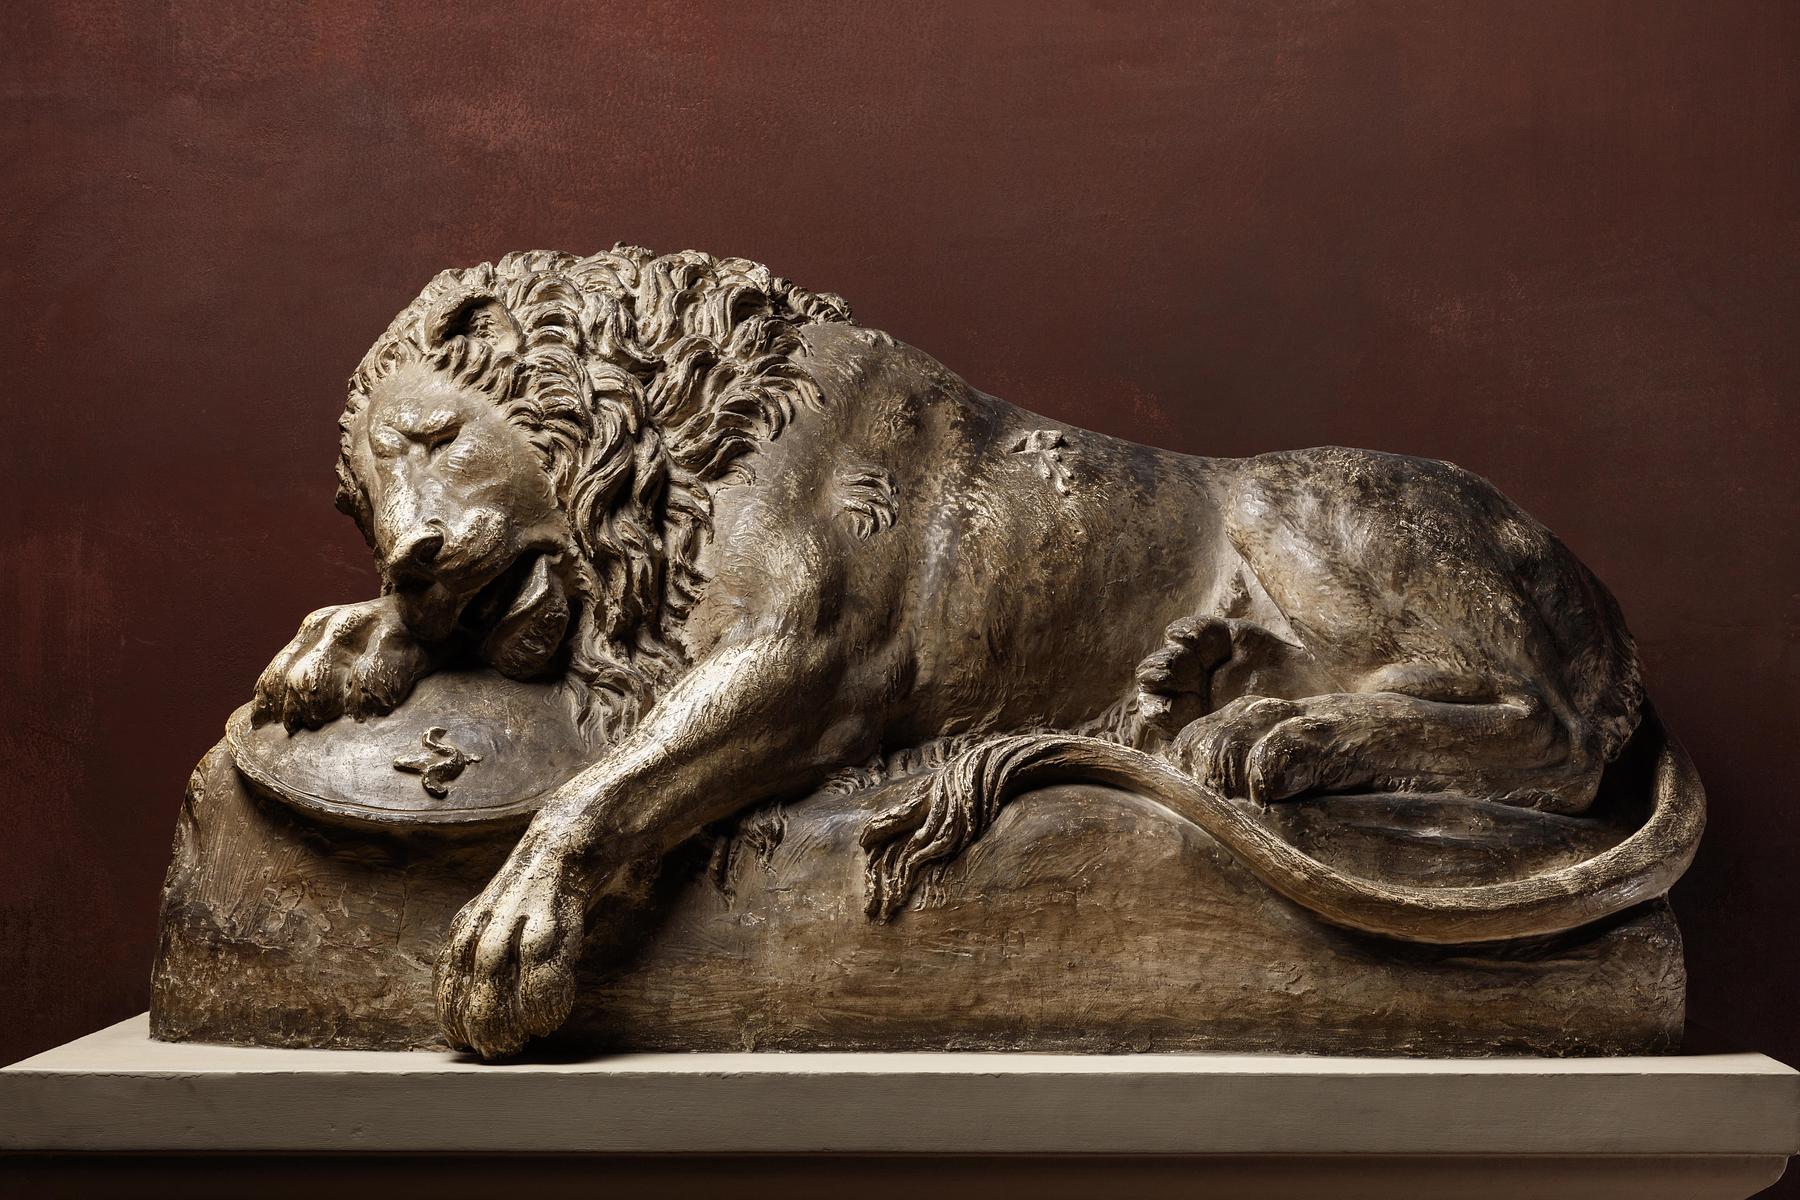 Dying Lion (The Lucerne Lion), A119